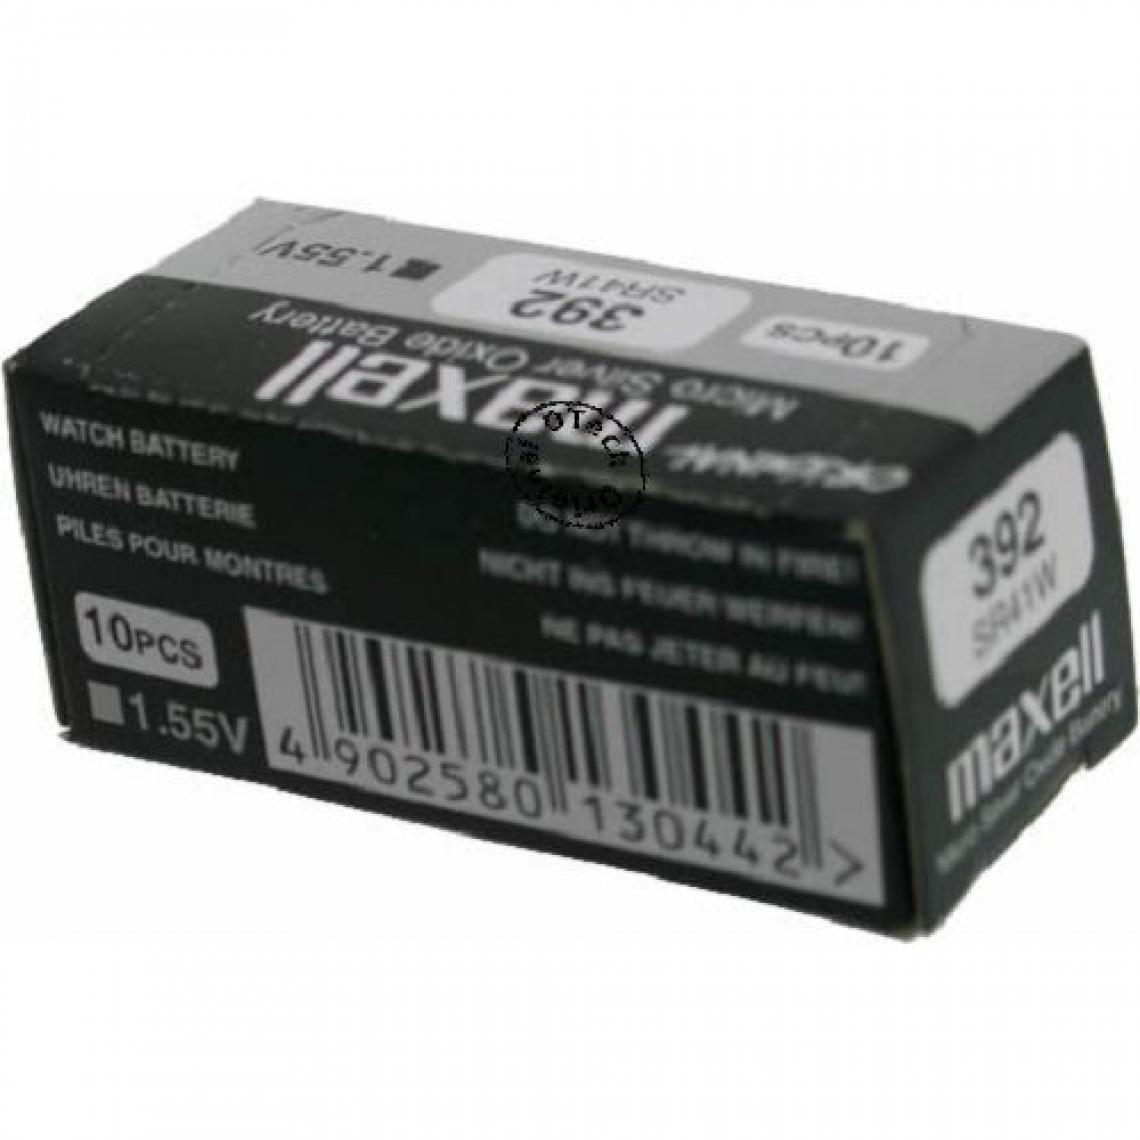 Otech - Pack de 10 piles maxell pour SEIKO SB-B1 - Piles rechargeables